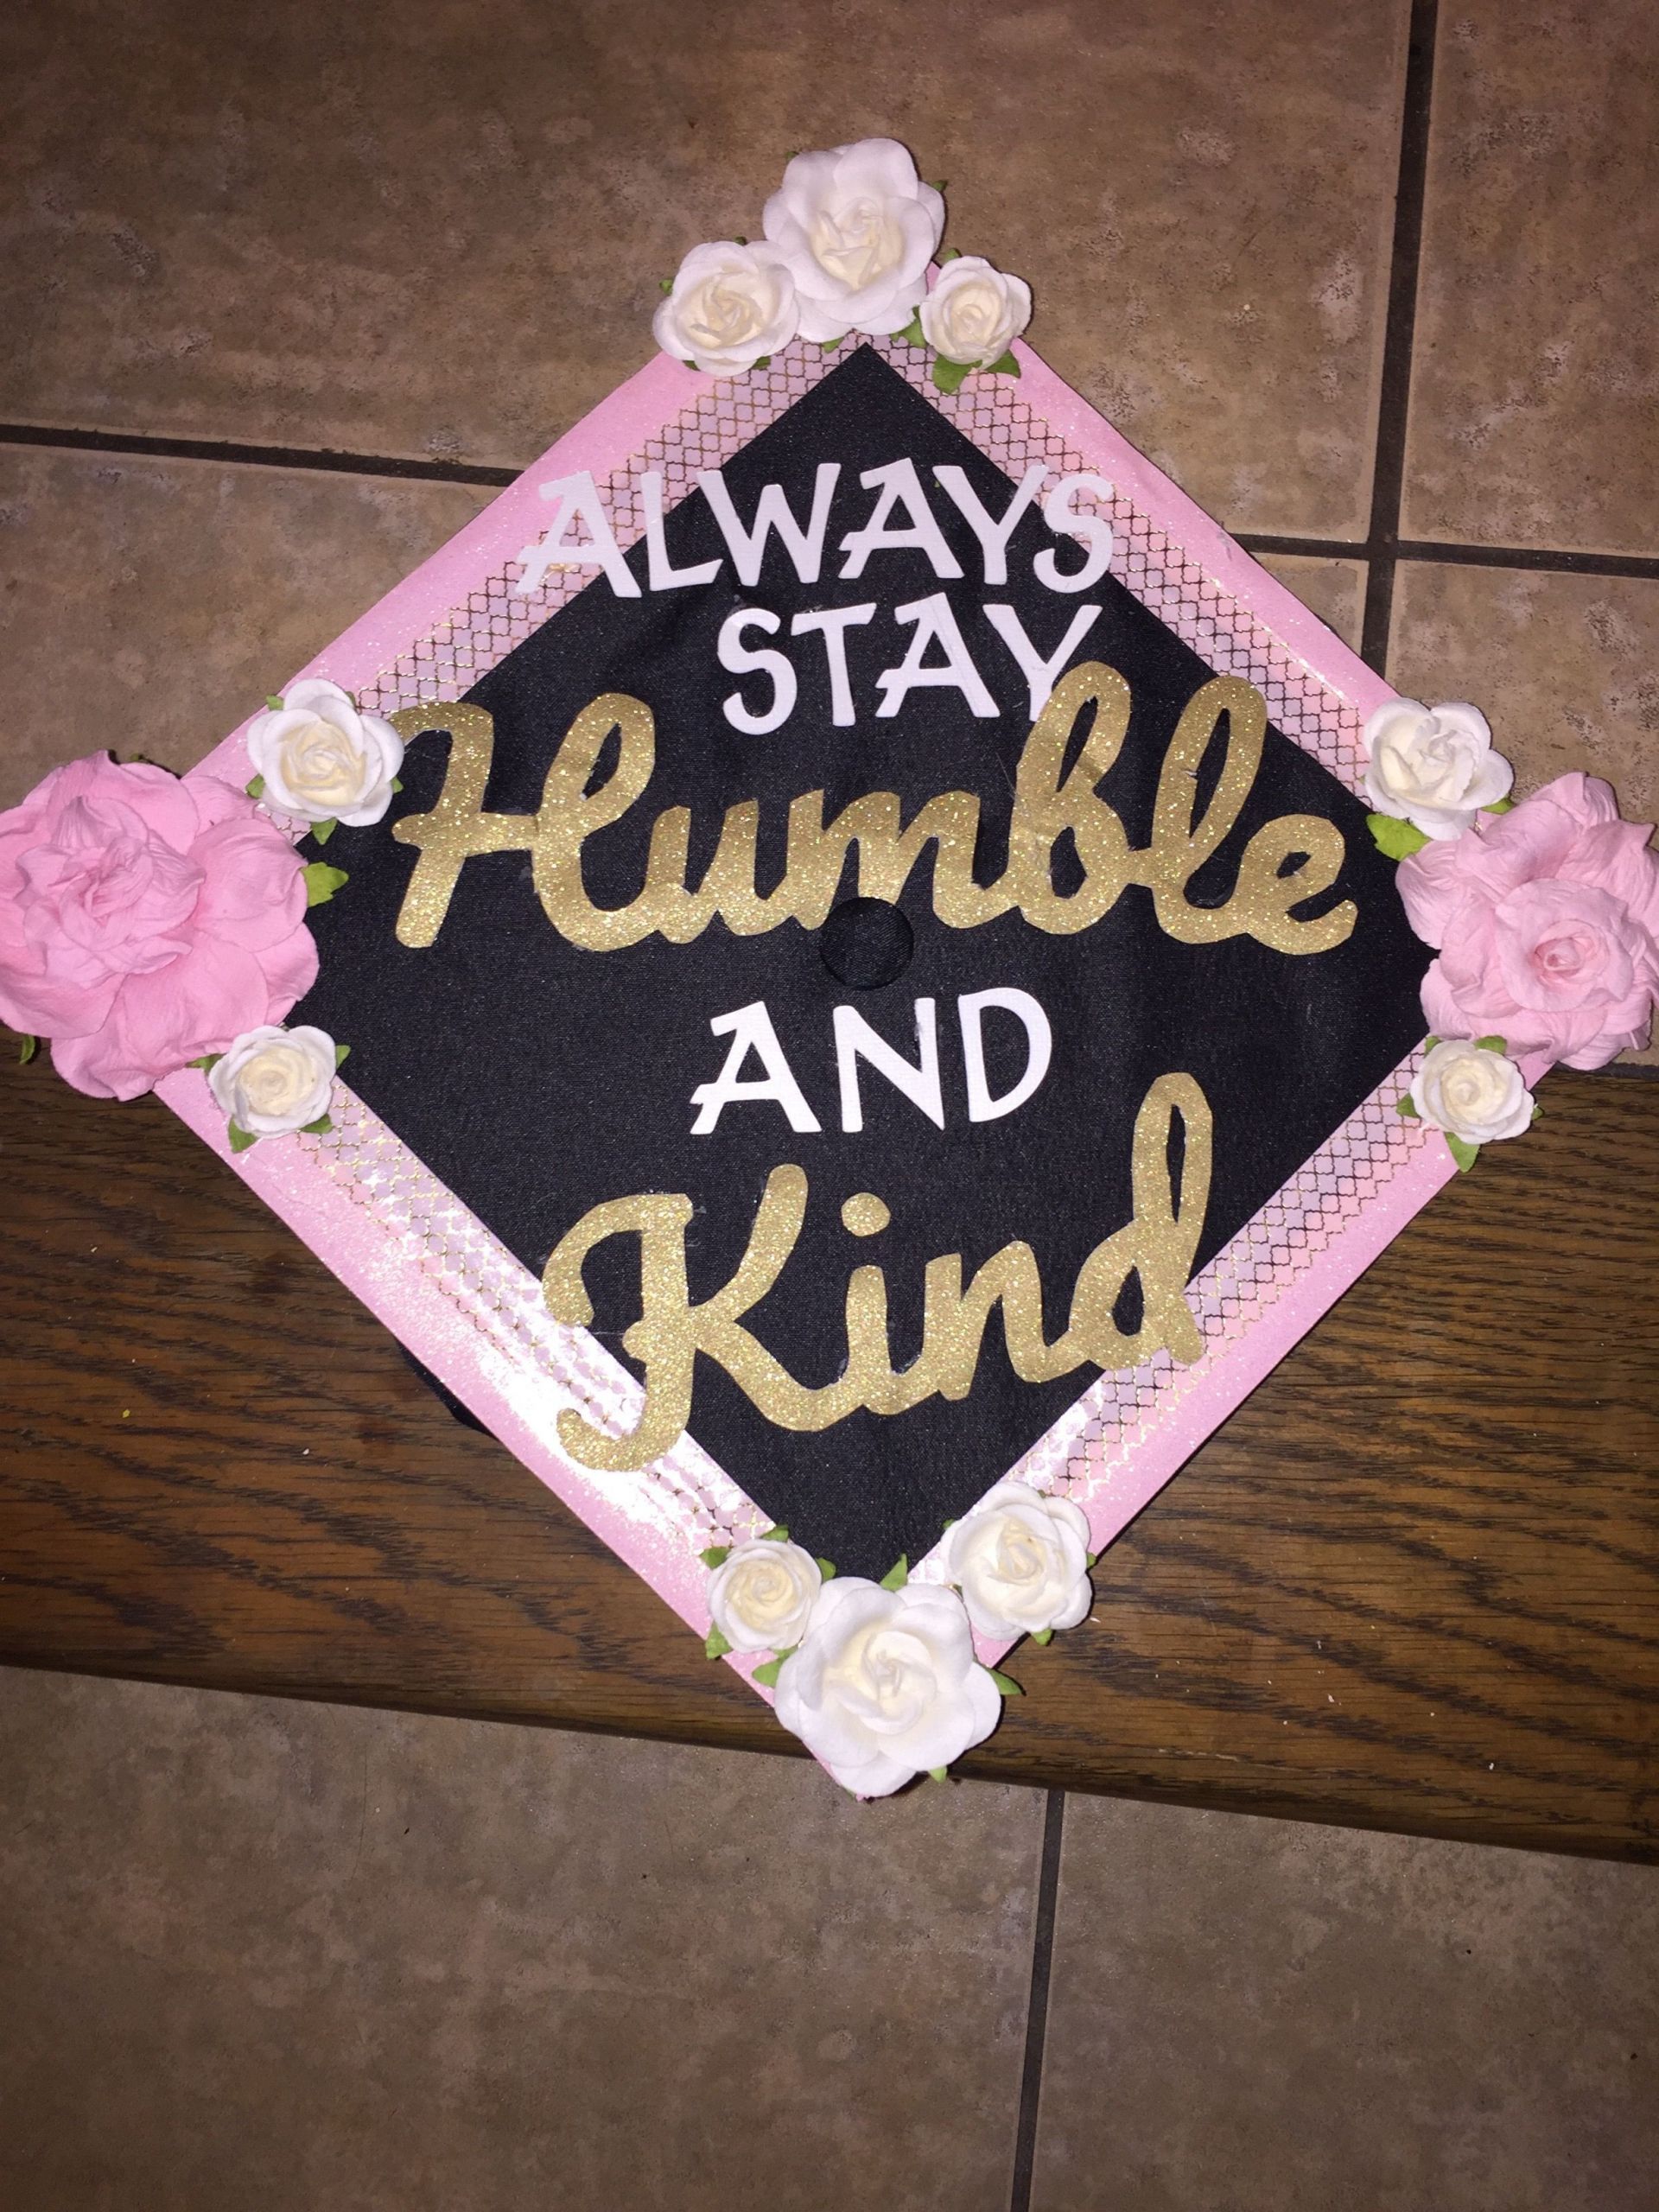 2017 Graduation Quotes
 Decorative Graduation cap 2017 Humble Pink With images